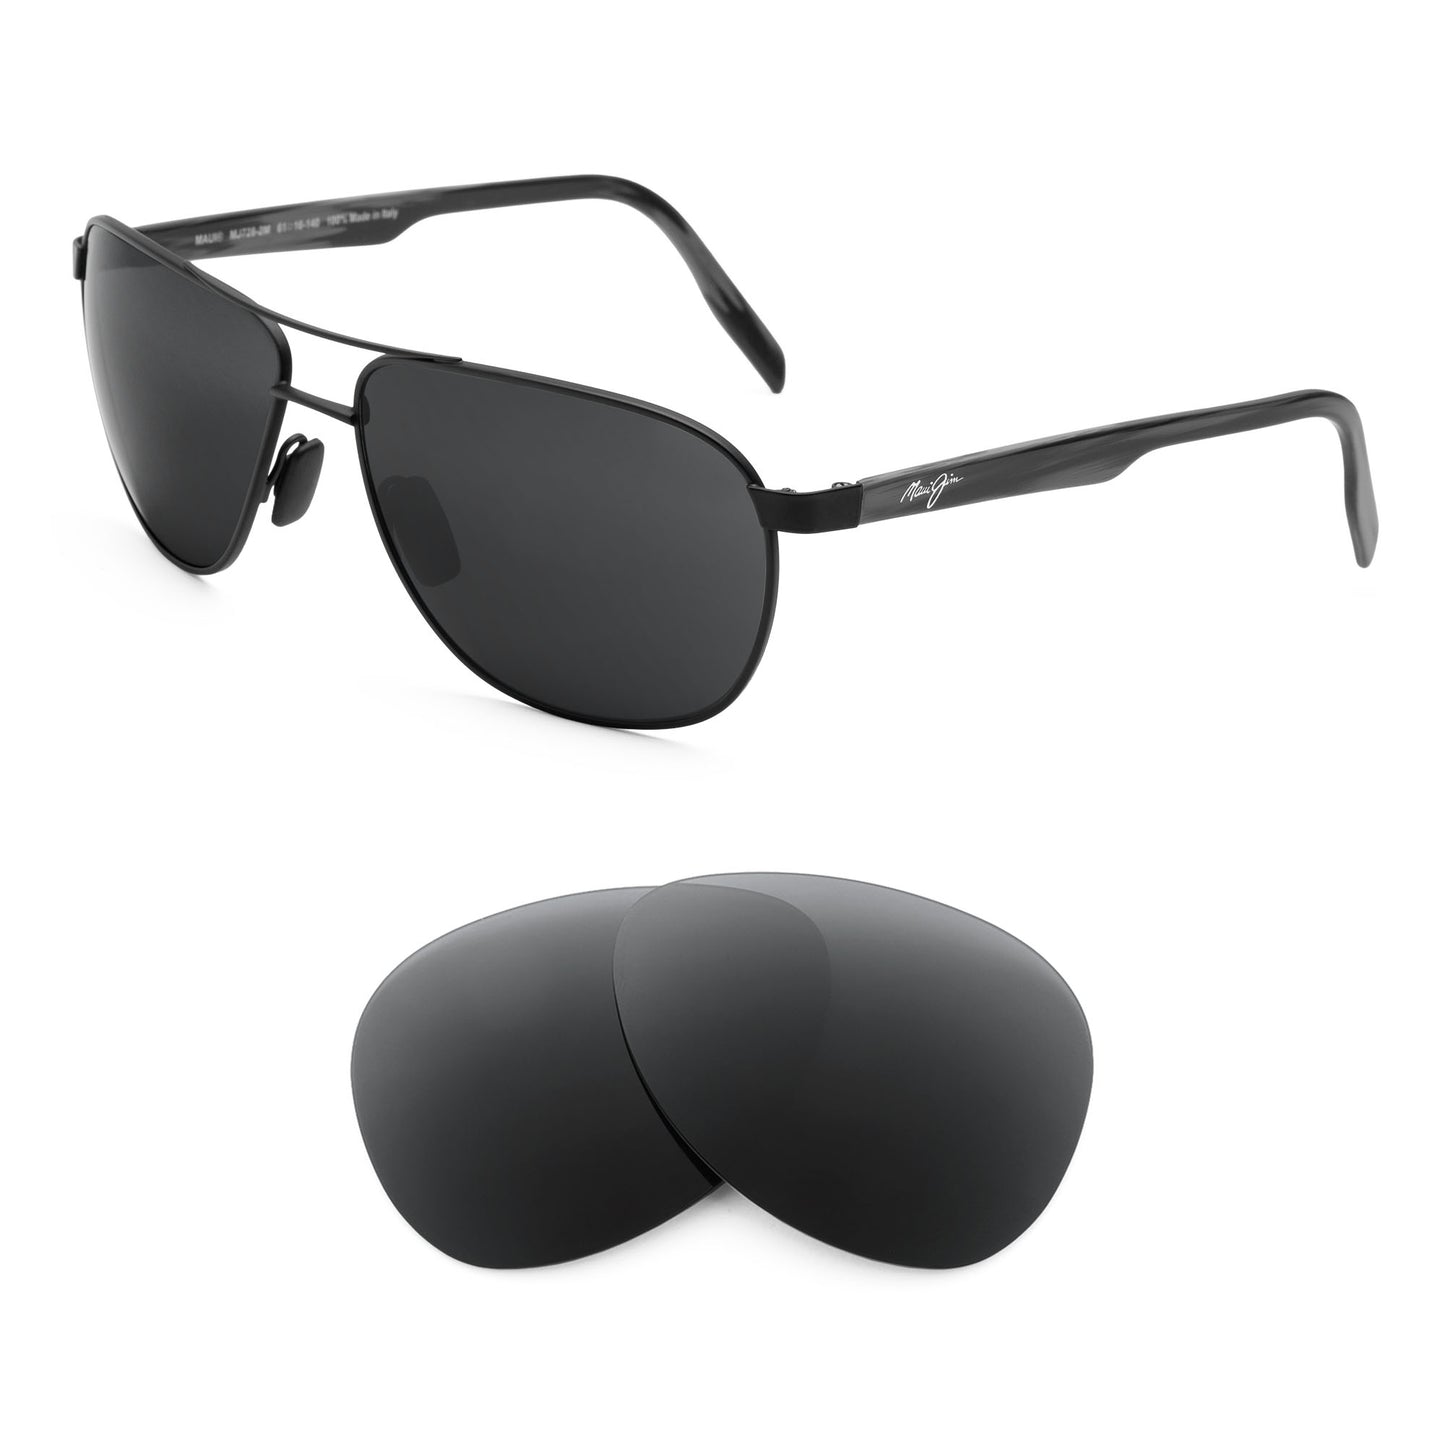 Maui Jim Castles sunglasses with replacement lenses